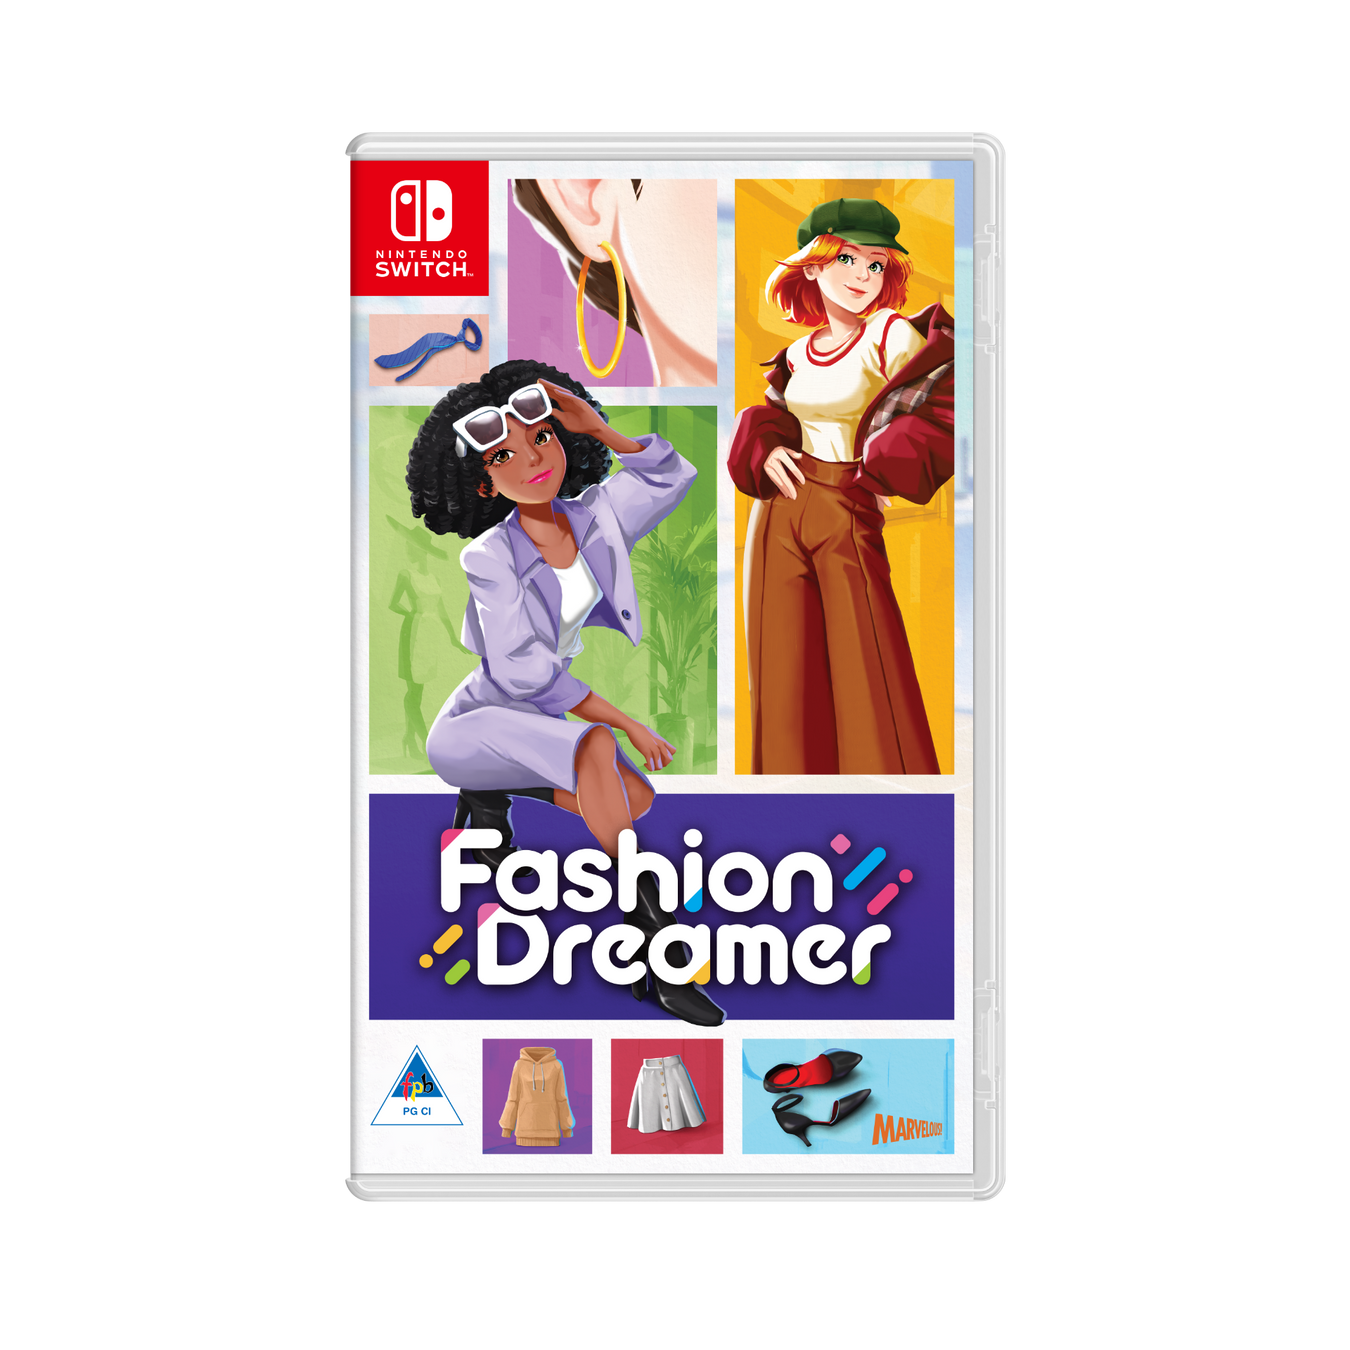 Festive SALE - Nintendo Switch Games